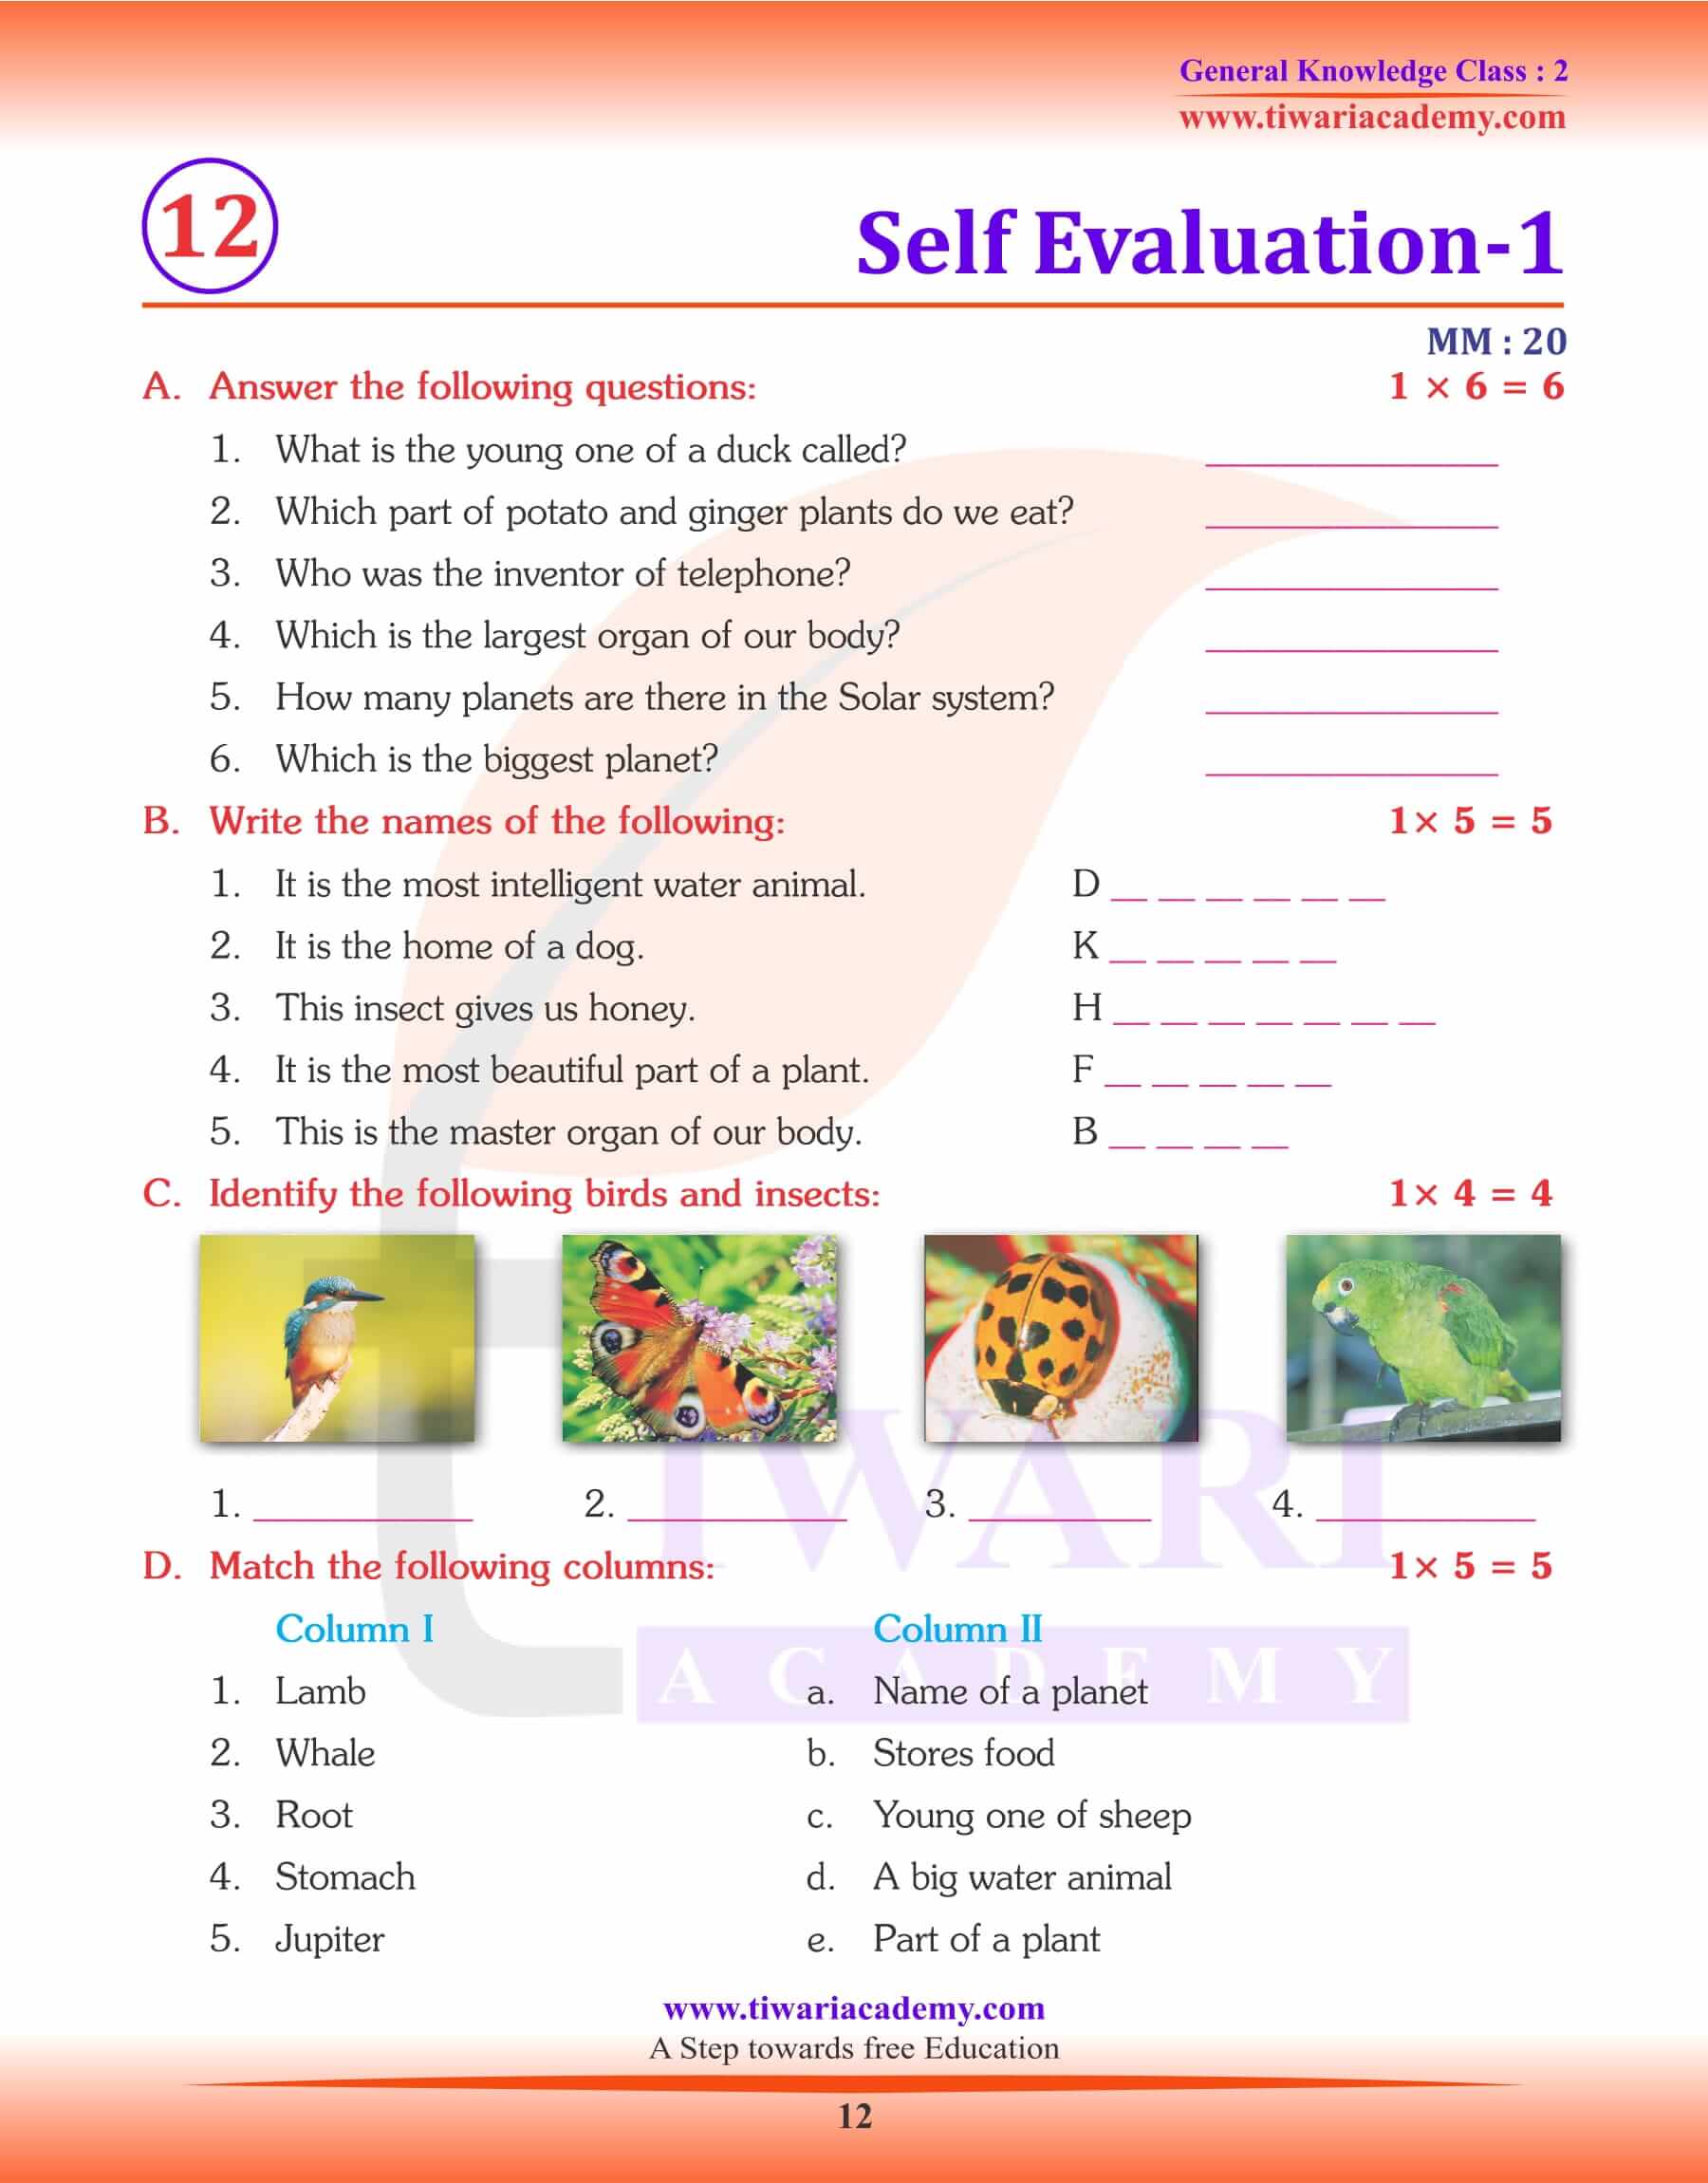 Self Evaluation GK Test 1